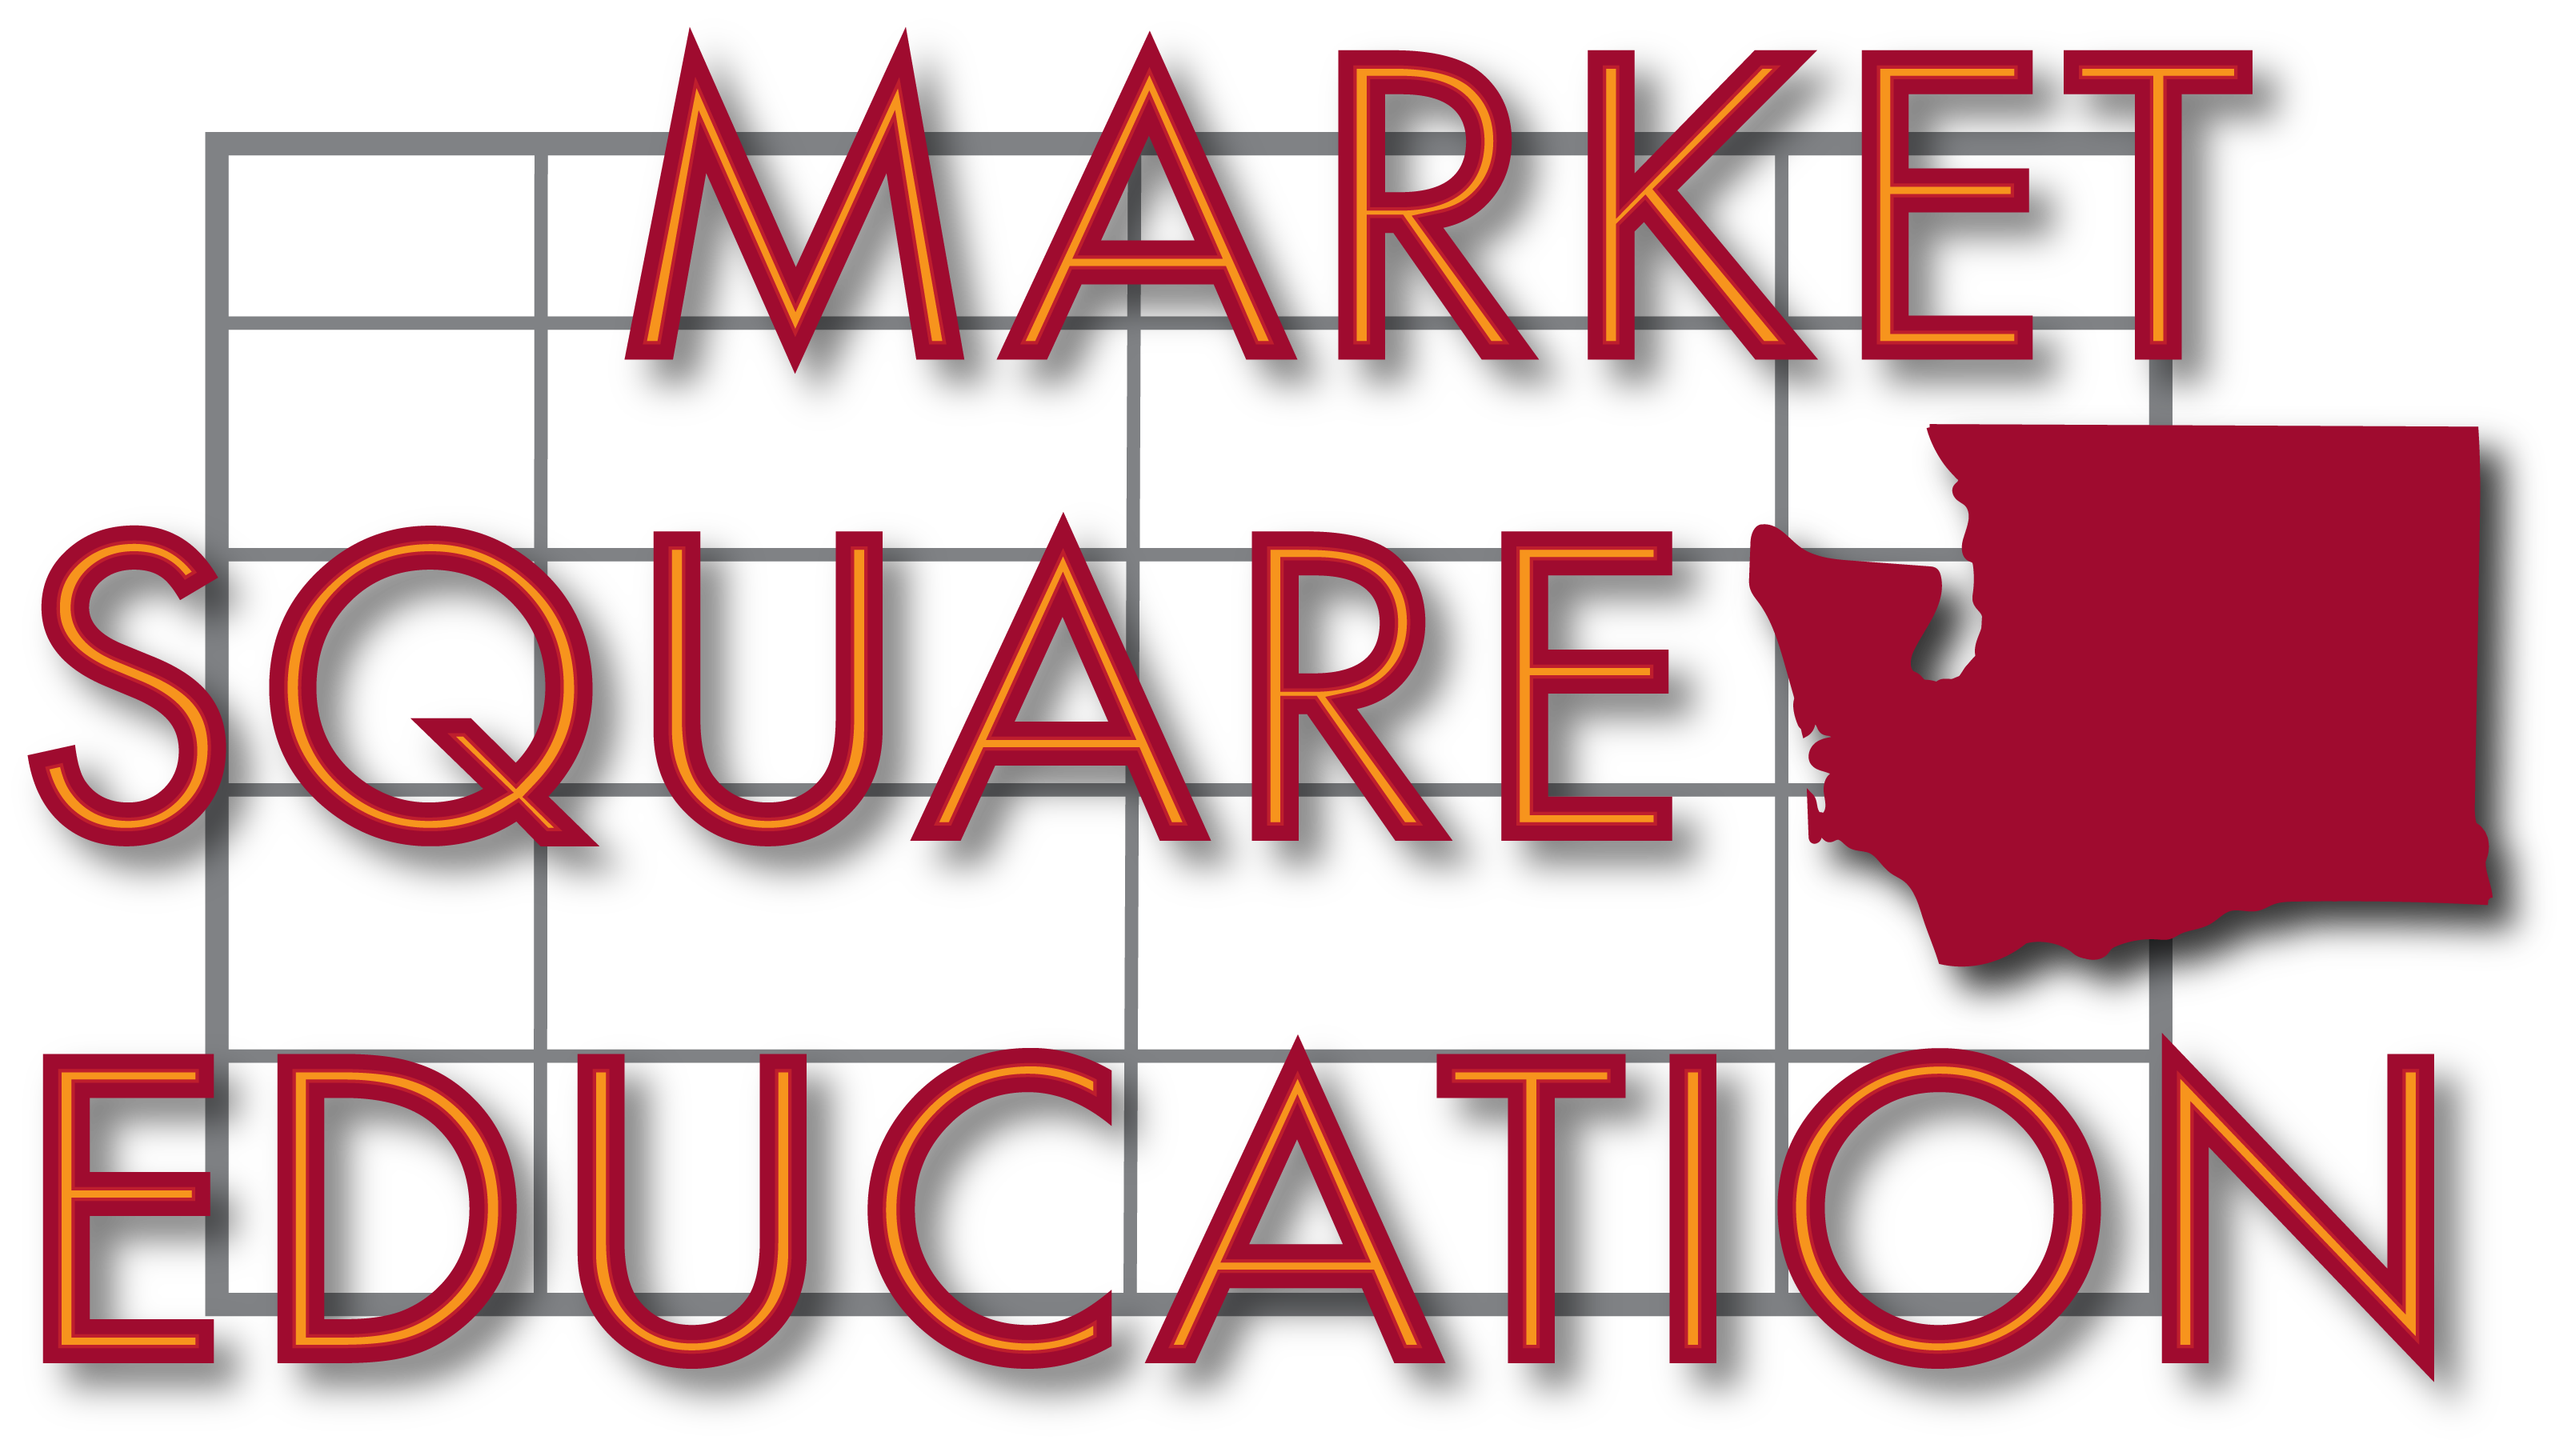 Market Square Education logo